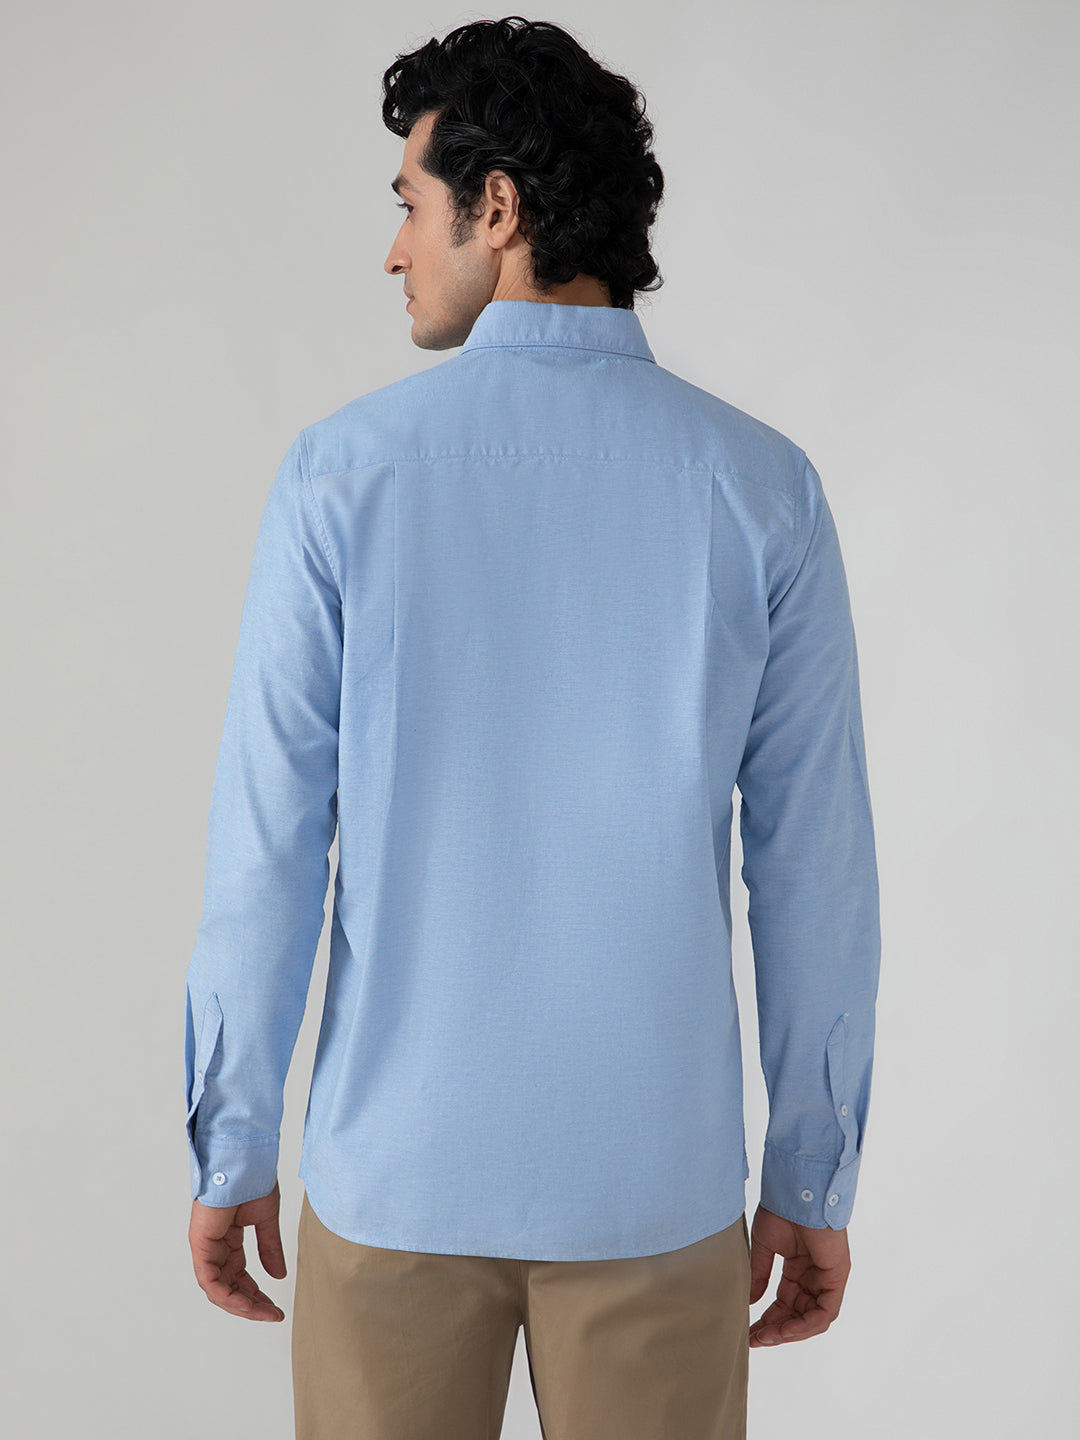 2 Way Stretch Oxford Shirt in Sky Blue-Slim Fit